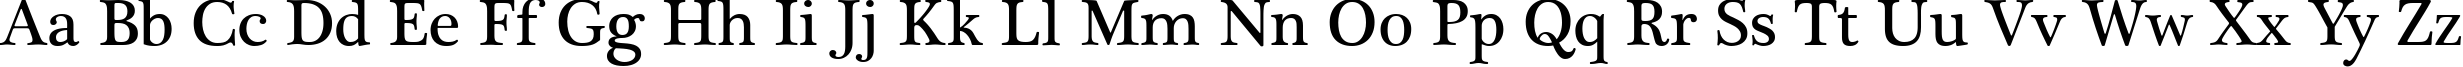 Пример написания английского алфавита шрифтом Plantagenet Cherokee